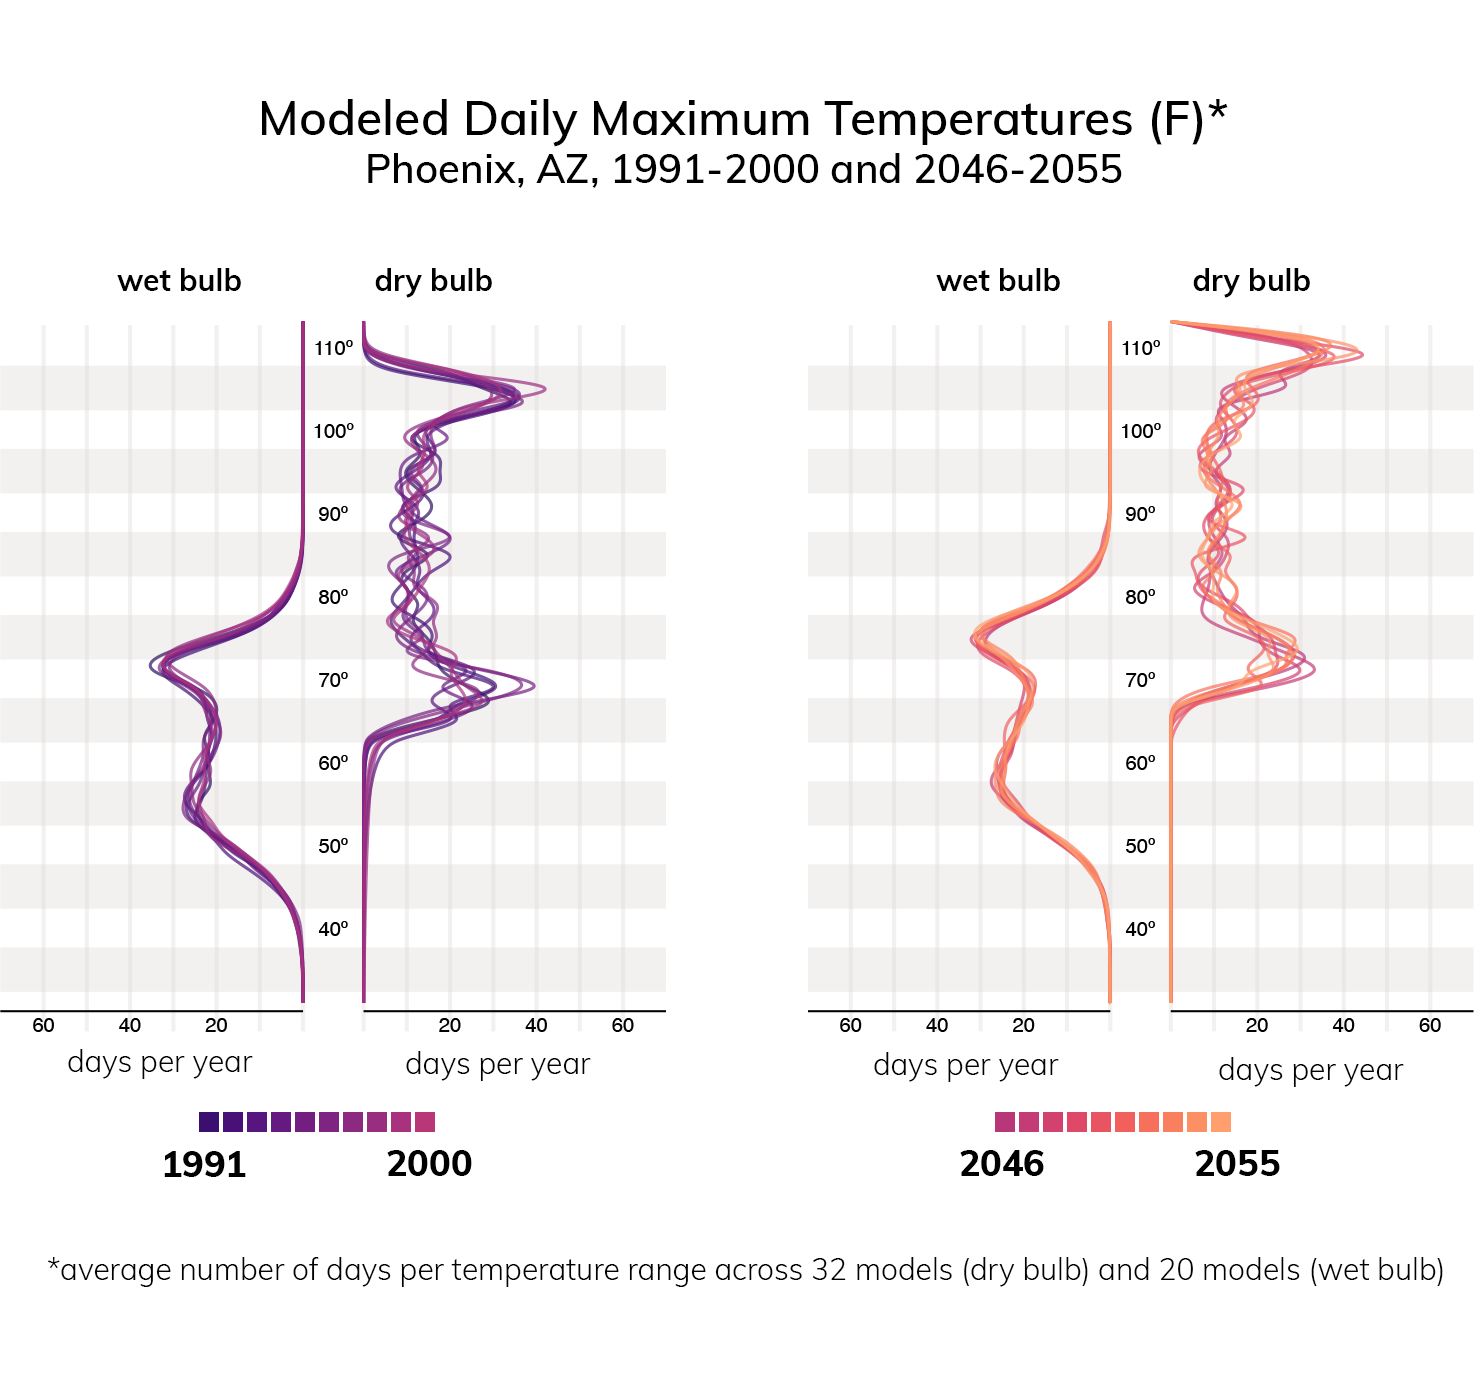 modeled daily maximum temperatures, Phoenix, AZ, 1991-2000 and 2046-2055